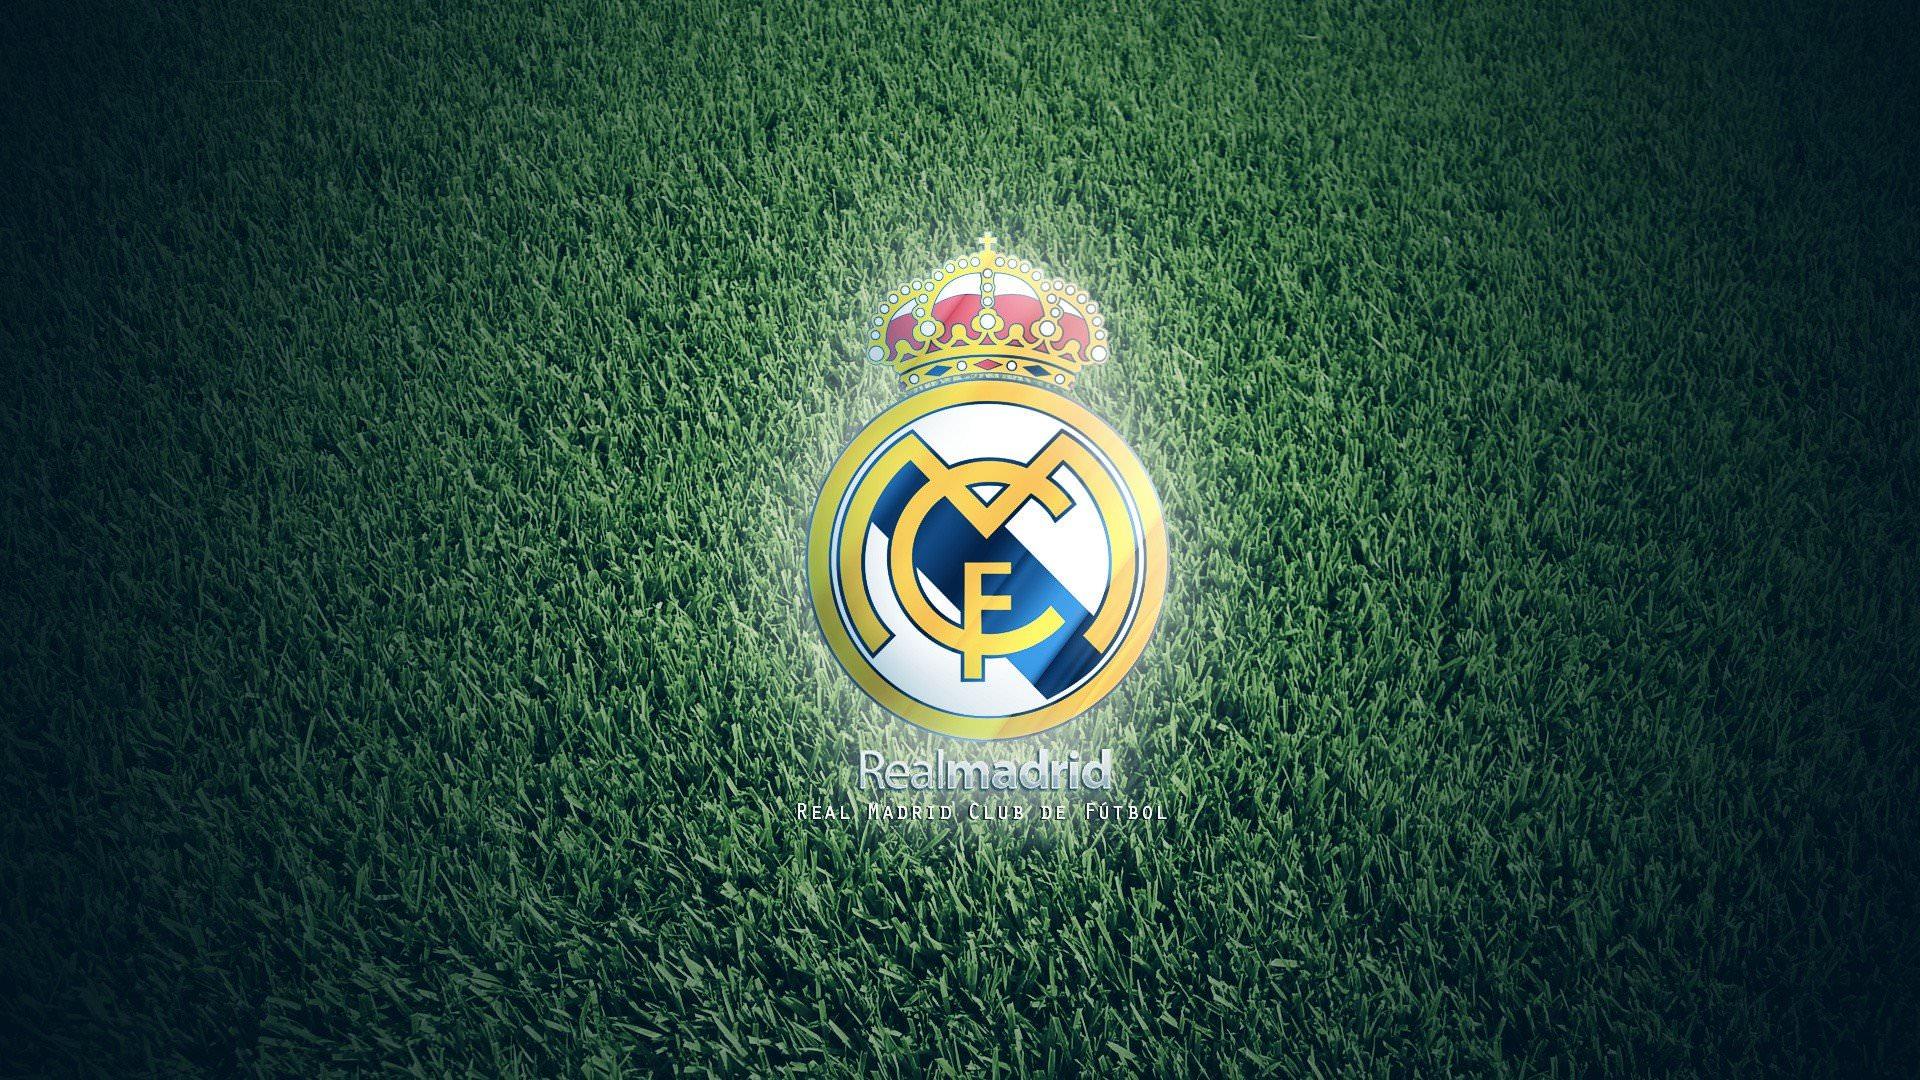 Real Madrid C.F. wallpaper 1920x1080 Full HD (1080p) desktop background